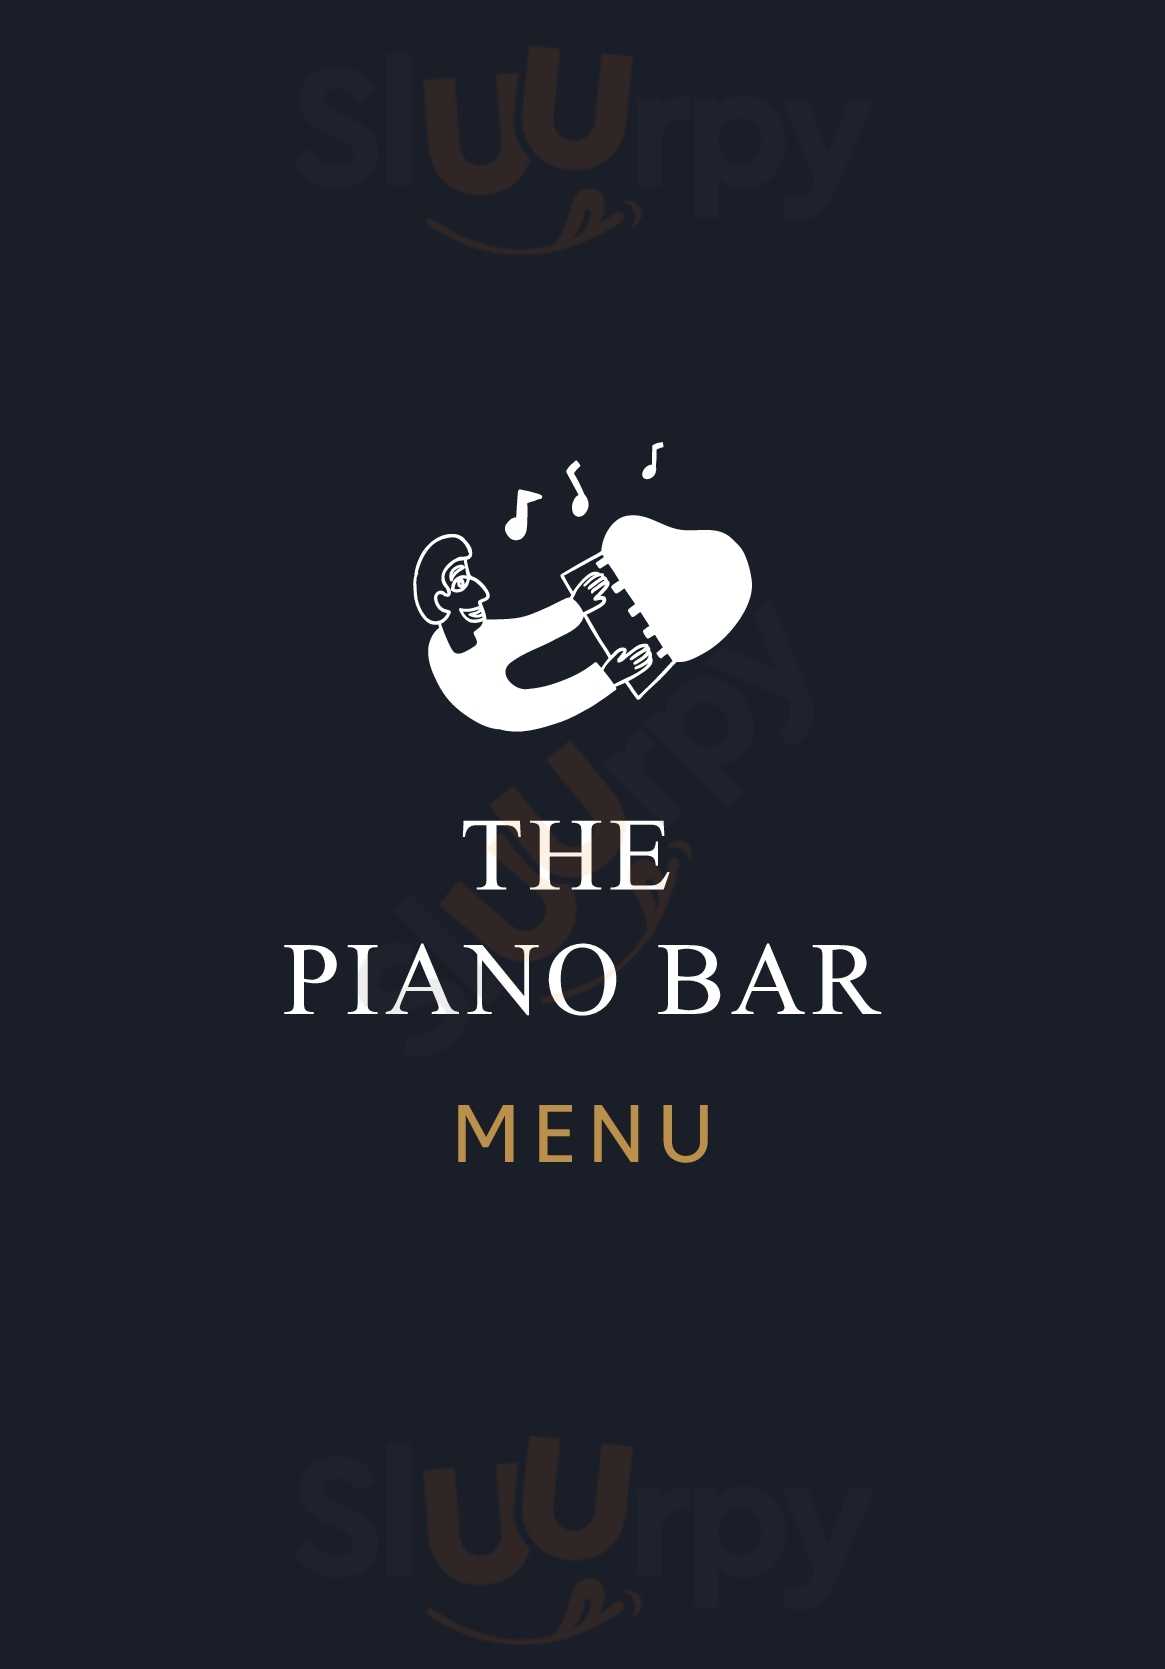 The Piano Bar Cape Town Cape Town Central Menu - 1